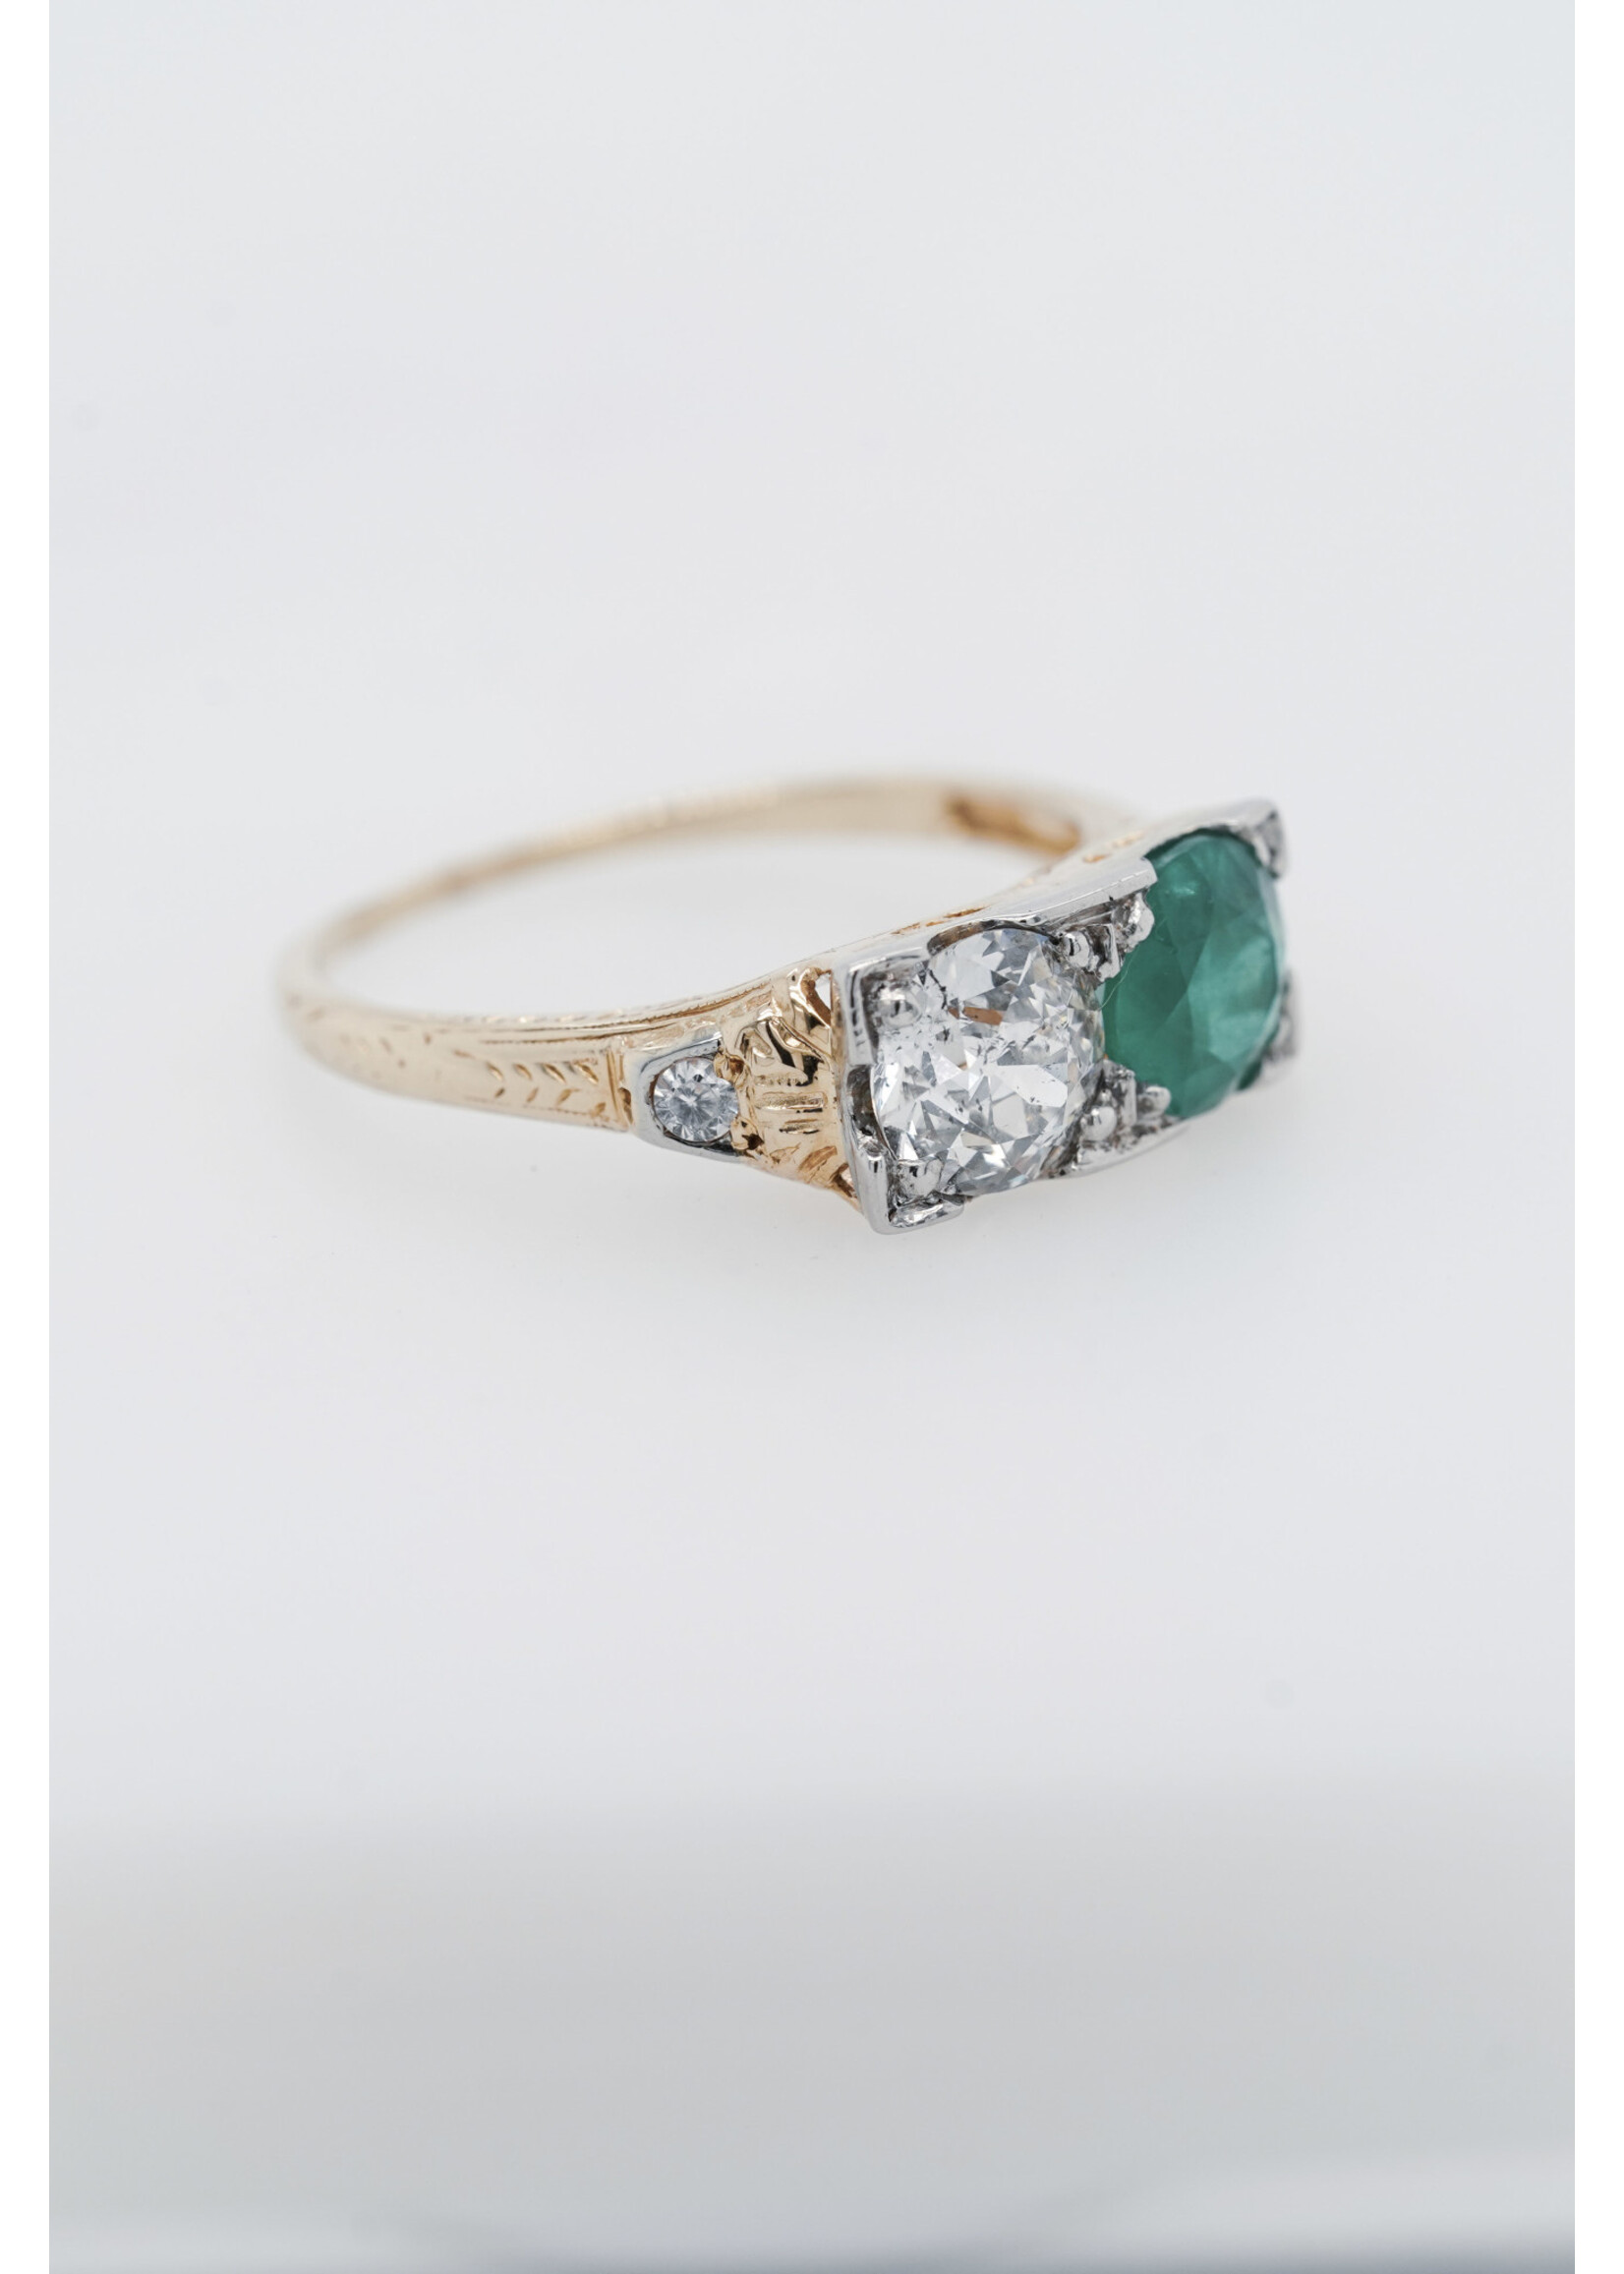 14KY/18KW 3.05g 2.20ctw Emerald & Diamond 2-Stone Antique Ring (size 8.5)